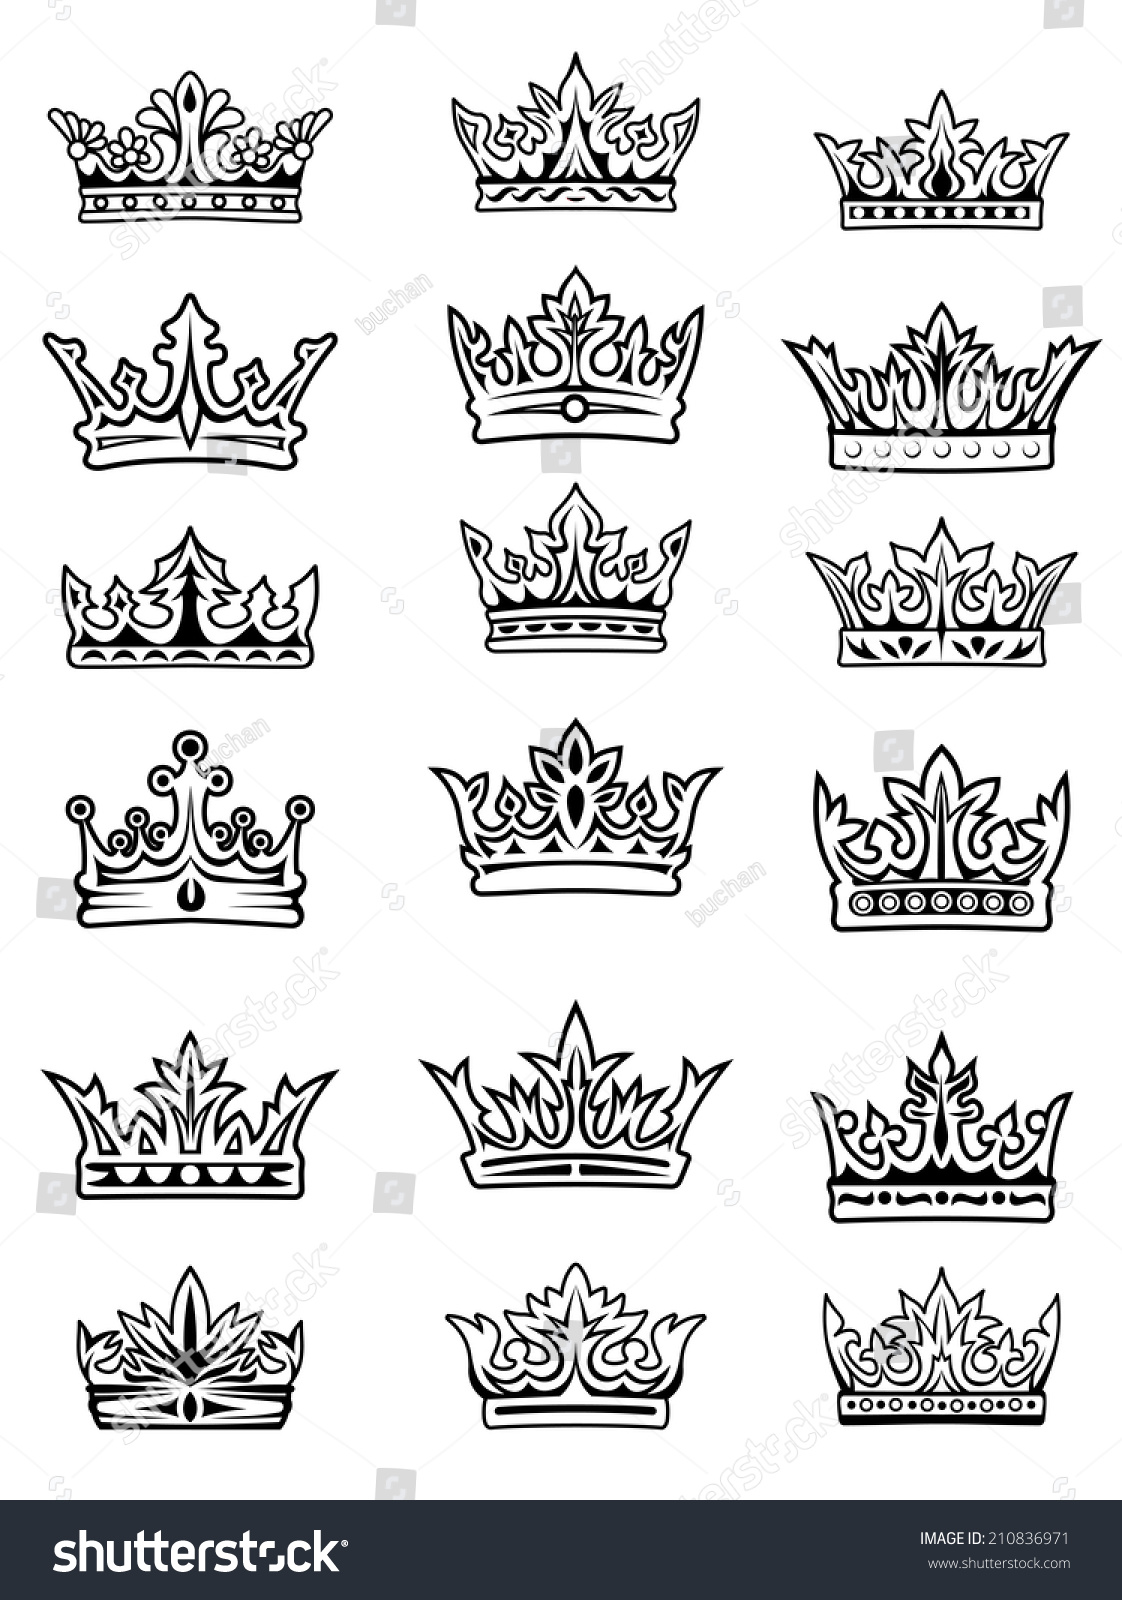 Корона эскиз для печати